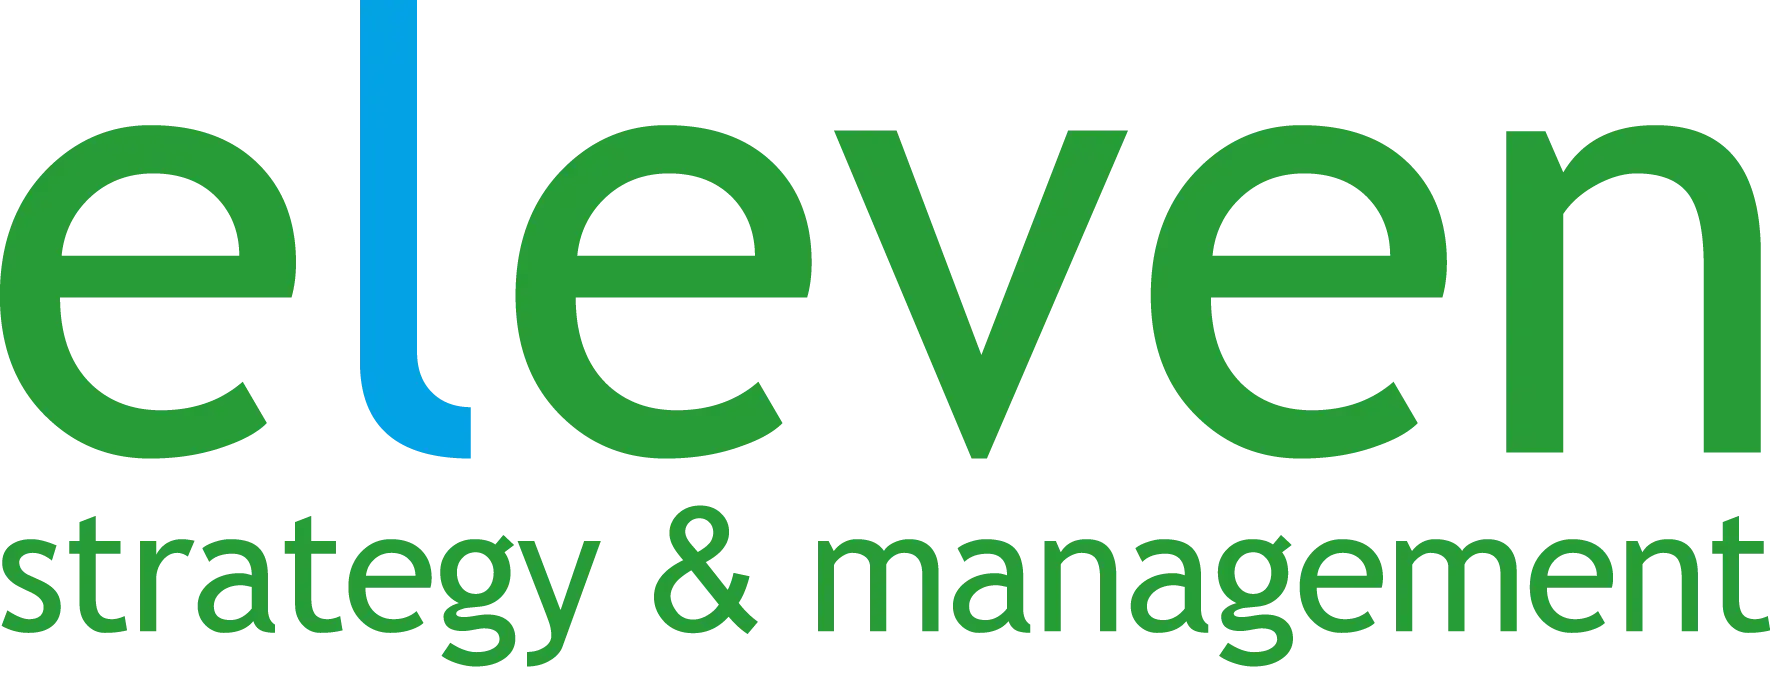 Logo entreprise consultant eleven strategy & management